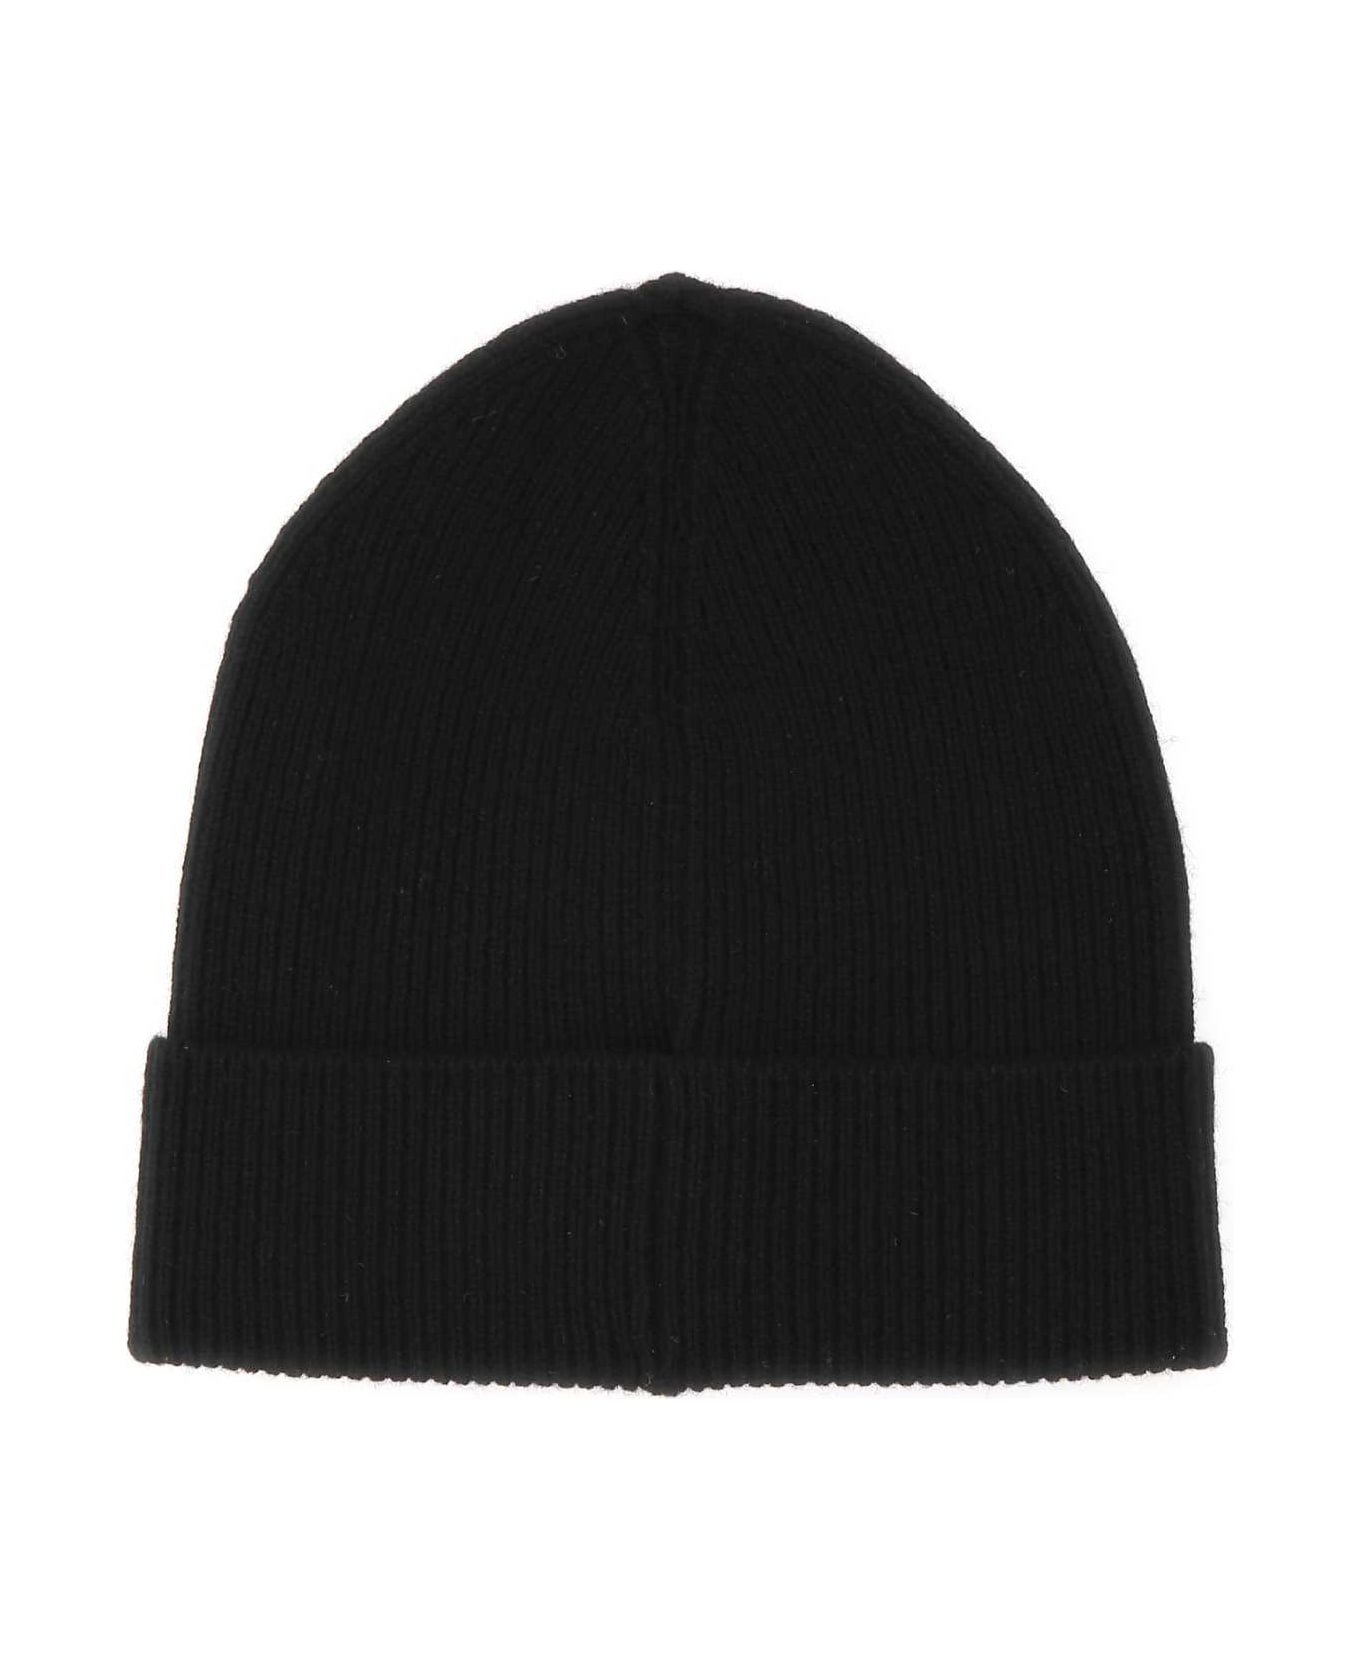 Prada Black Cashmere Beanie Hat - NERO